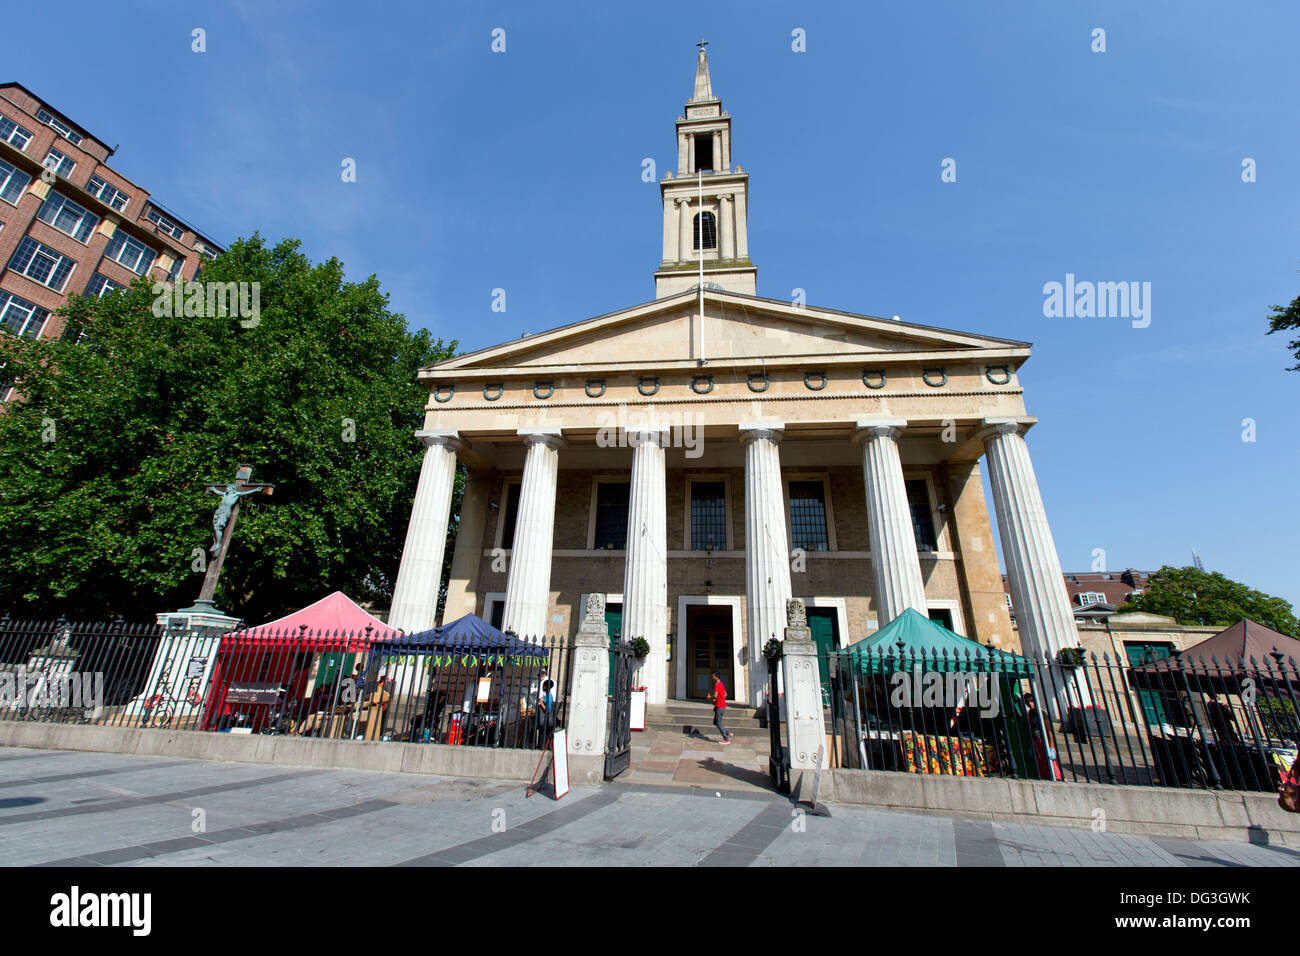 St John the Evangelist church, Waterloo, London, England, UK. Stock Photo